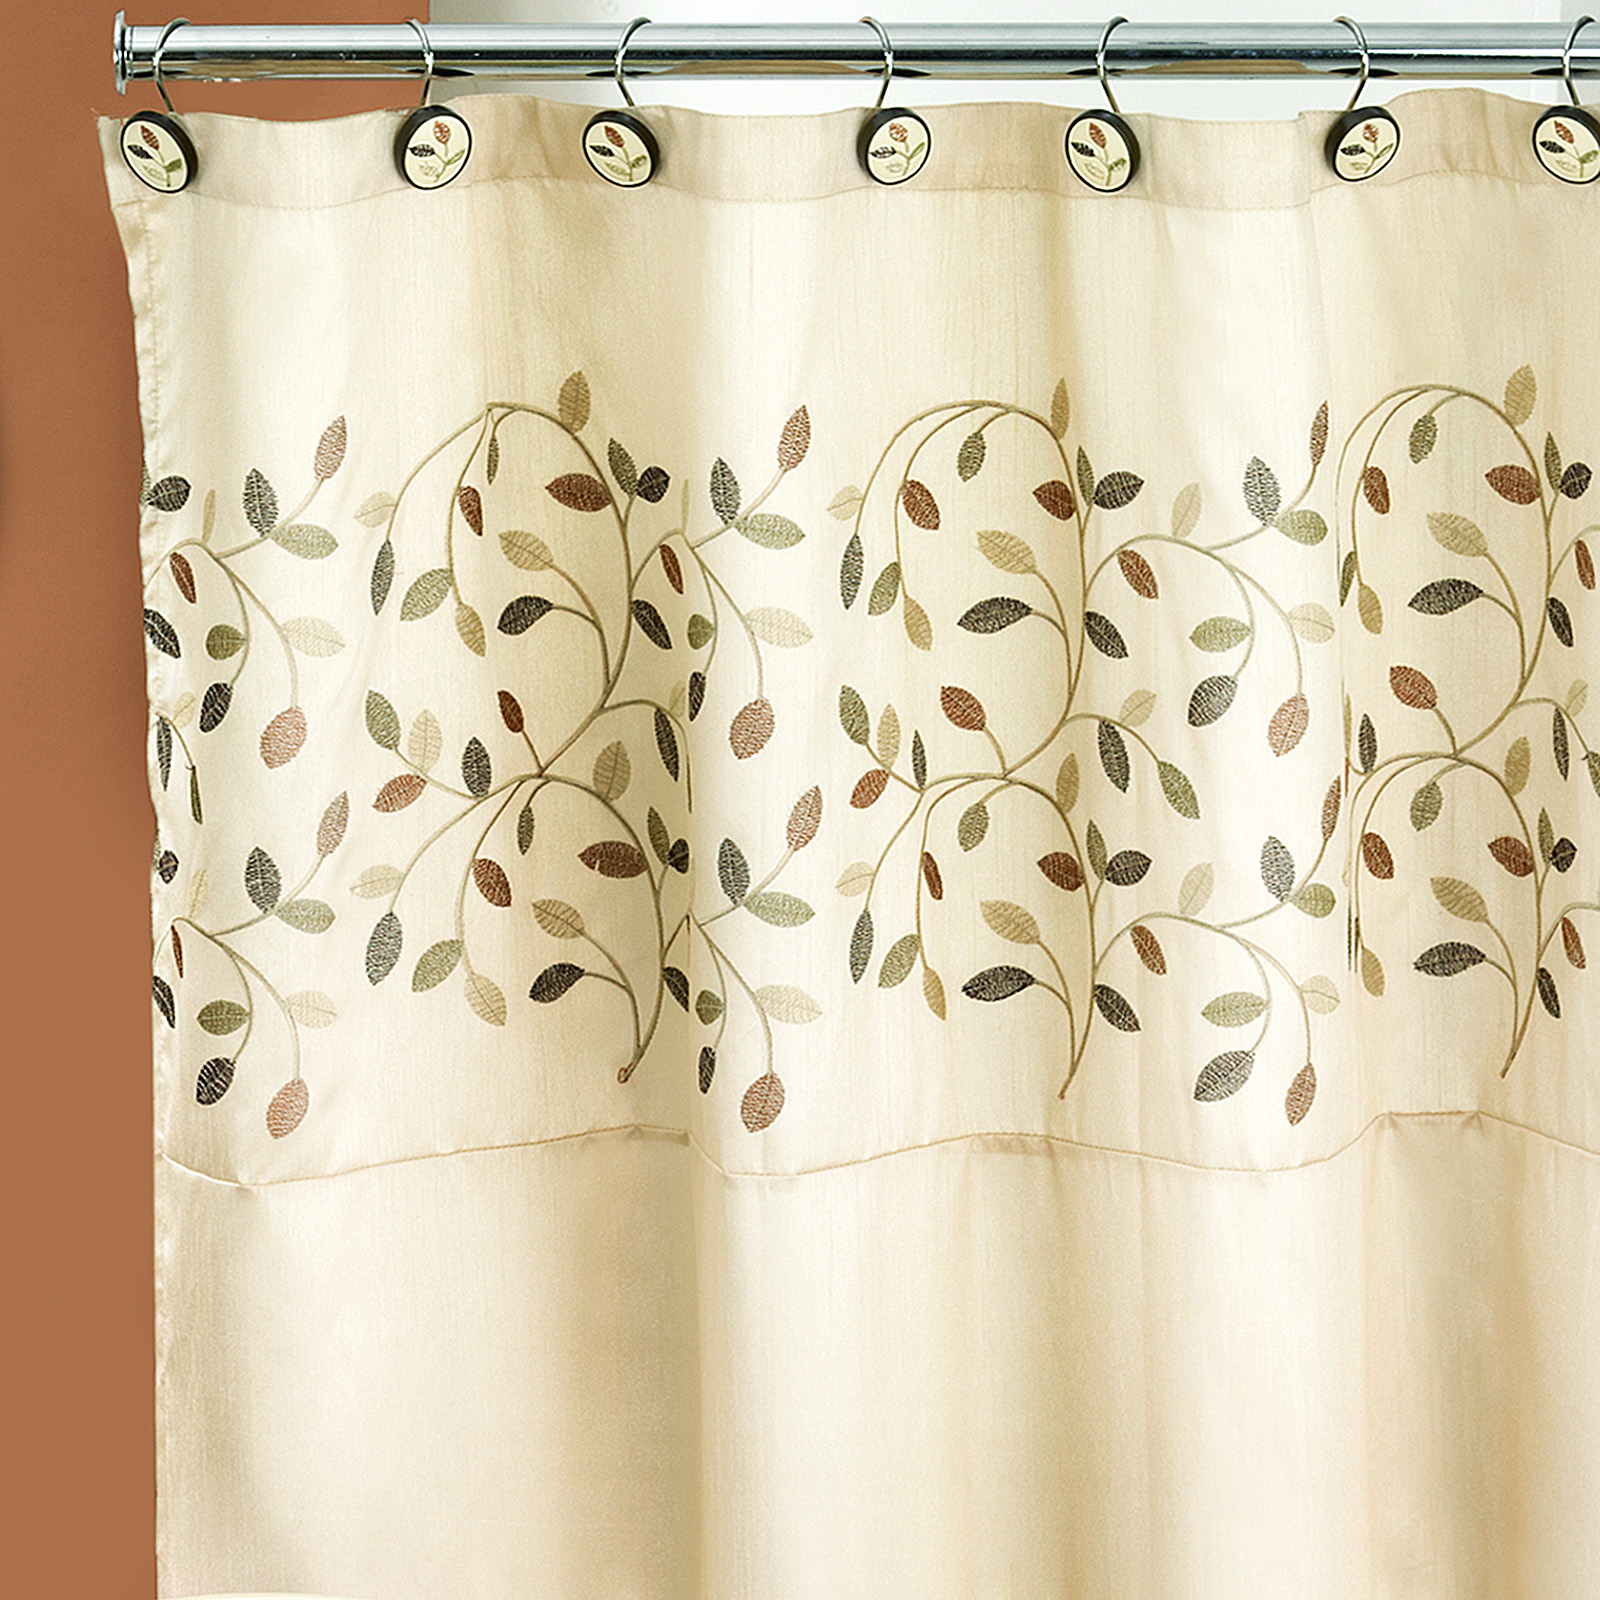 Popular Bath Products Aubury Shower Curtain - Beige